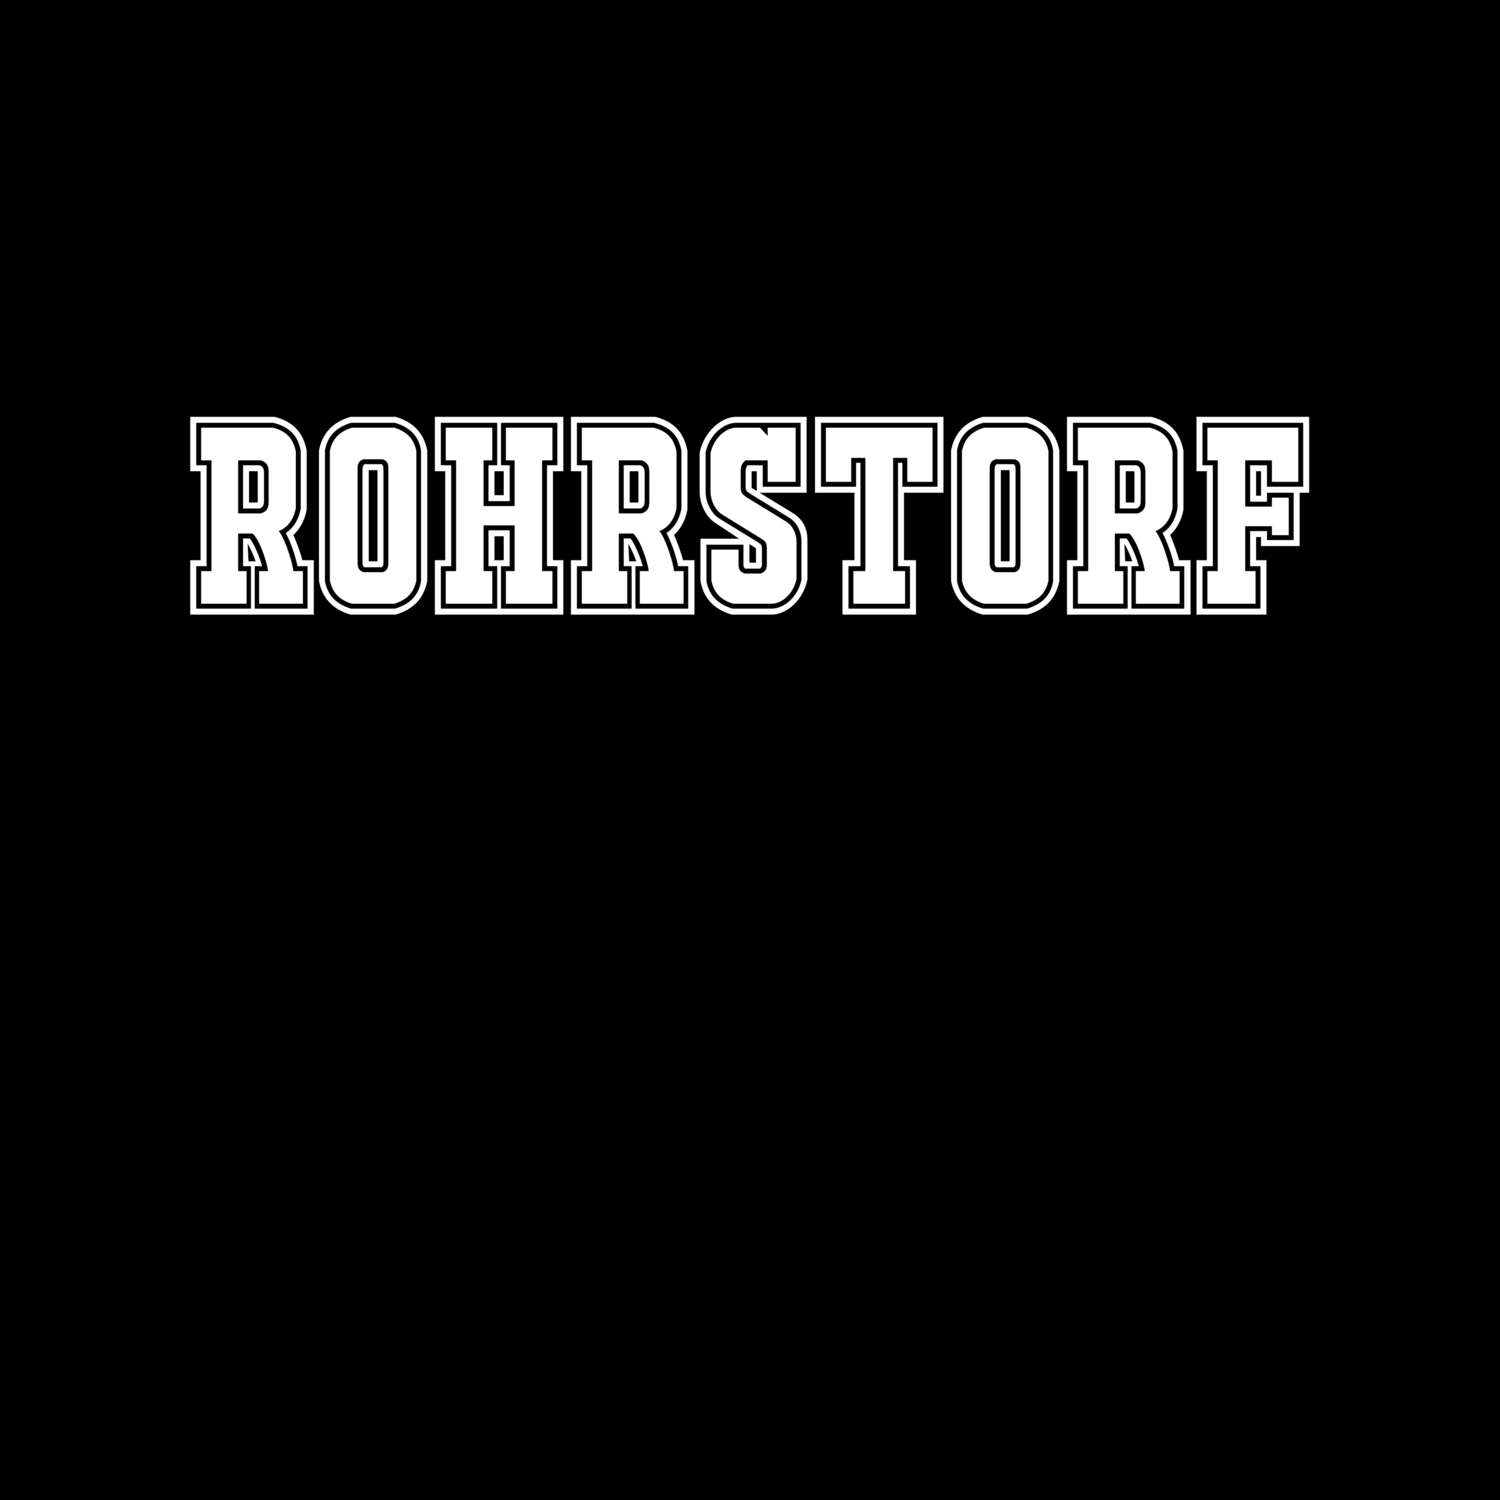 Rohrstorf T-Shirt »Classic«